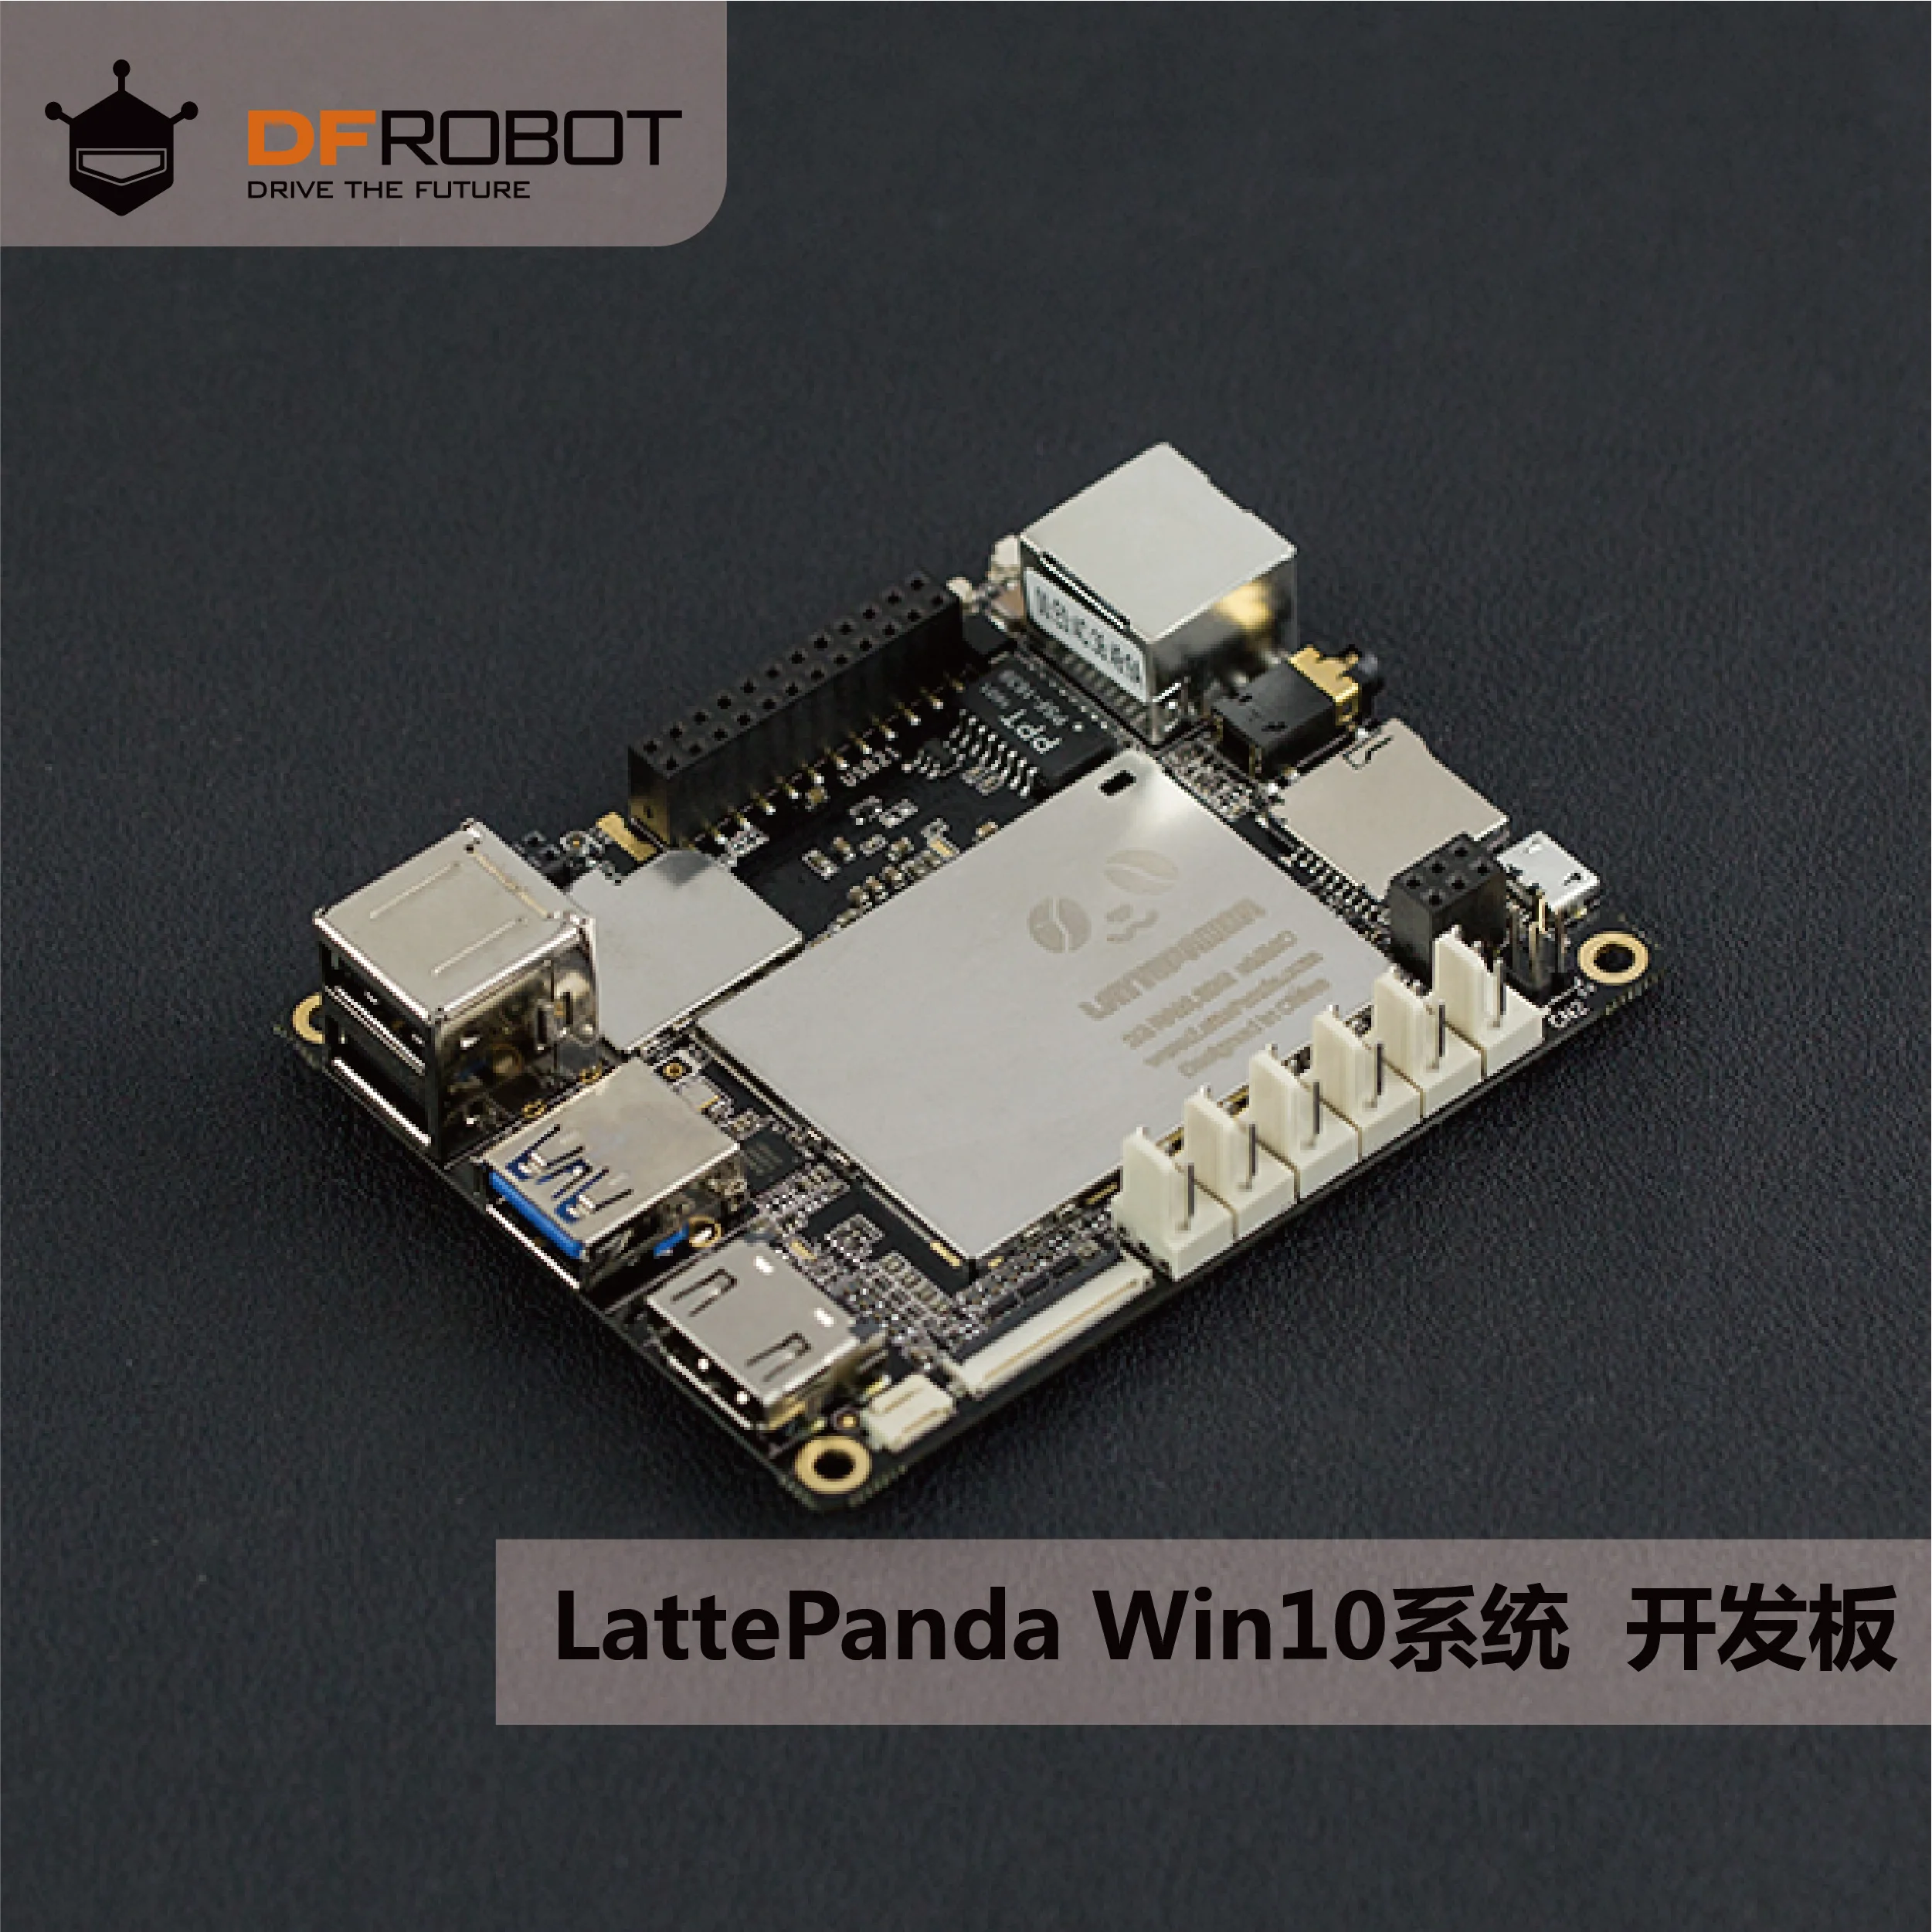 

[Win10 System] Latte Panda Lattepanda Development Board X86 Card Computer